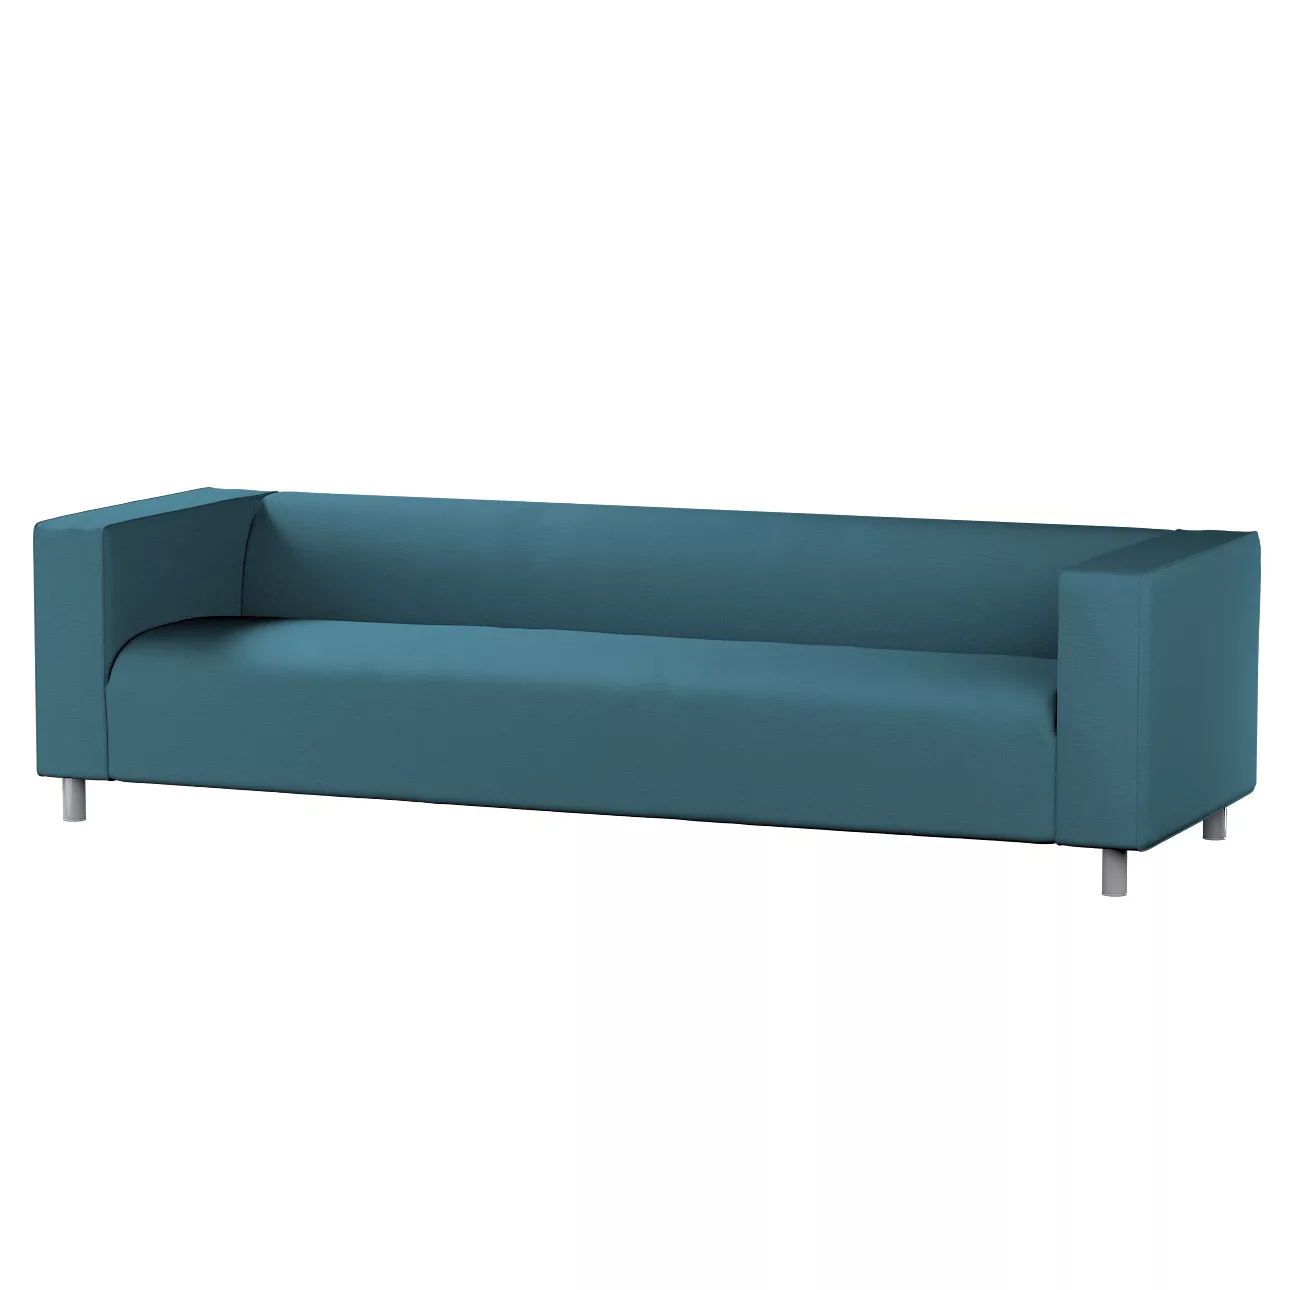 Bezug für Klippan 4-Sitzer Sofa, dunkelblau, Bezug für Klippan 4-Sitzer, Li günstig online kaufen